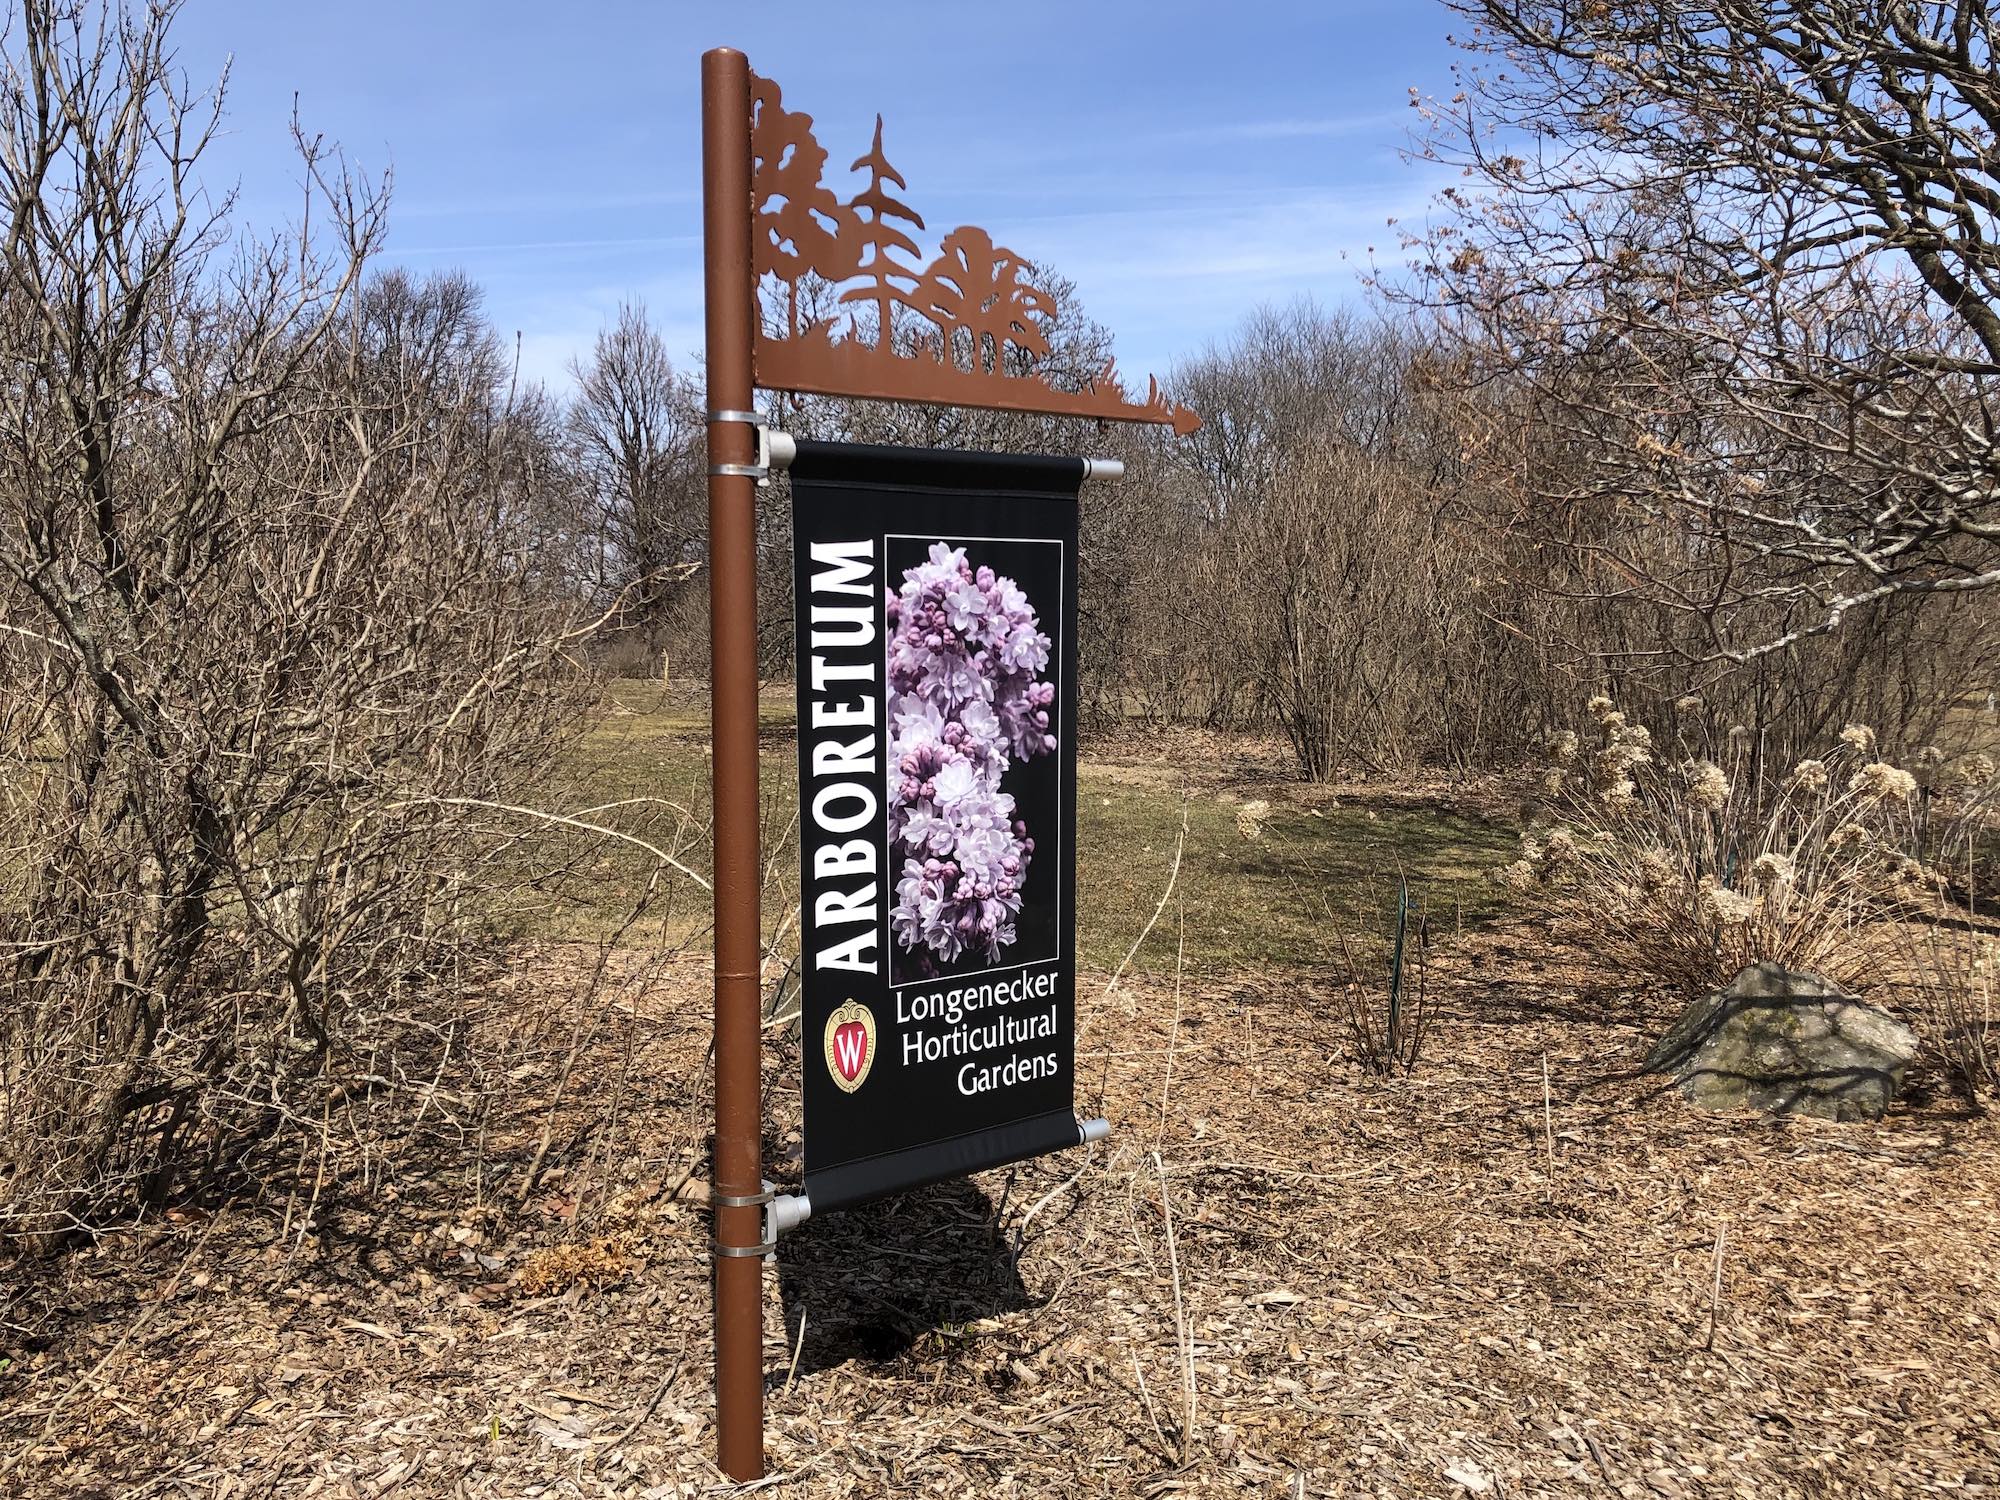 Longenecker Gardens at the University of Wisconsin Arboretum on March 26, 2019.